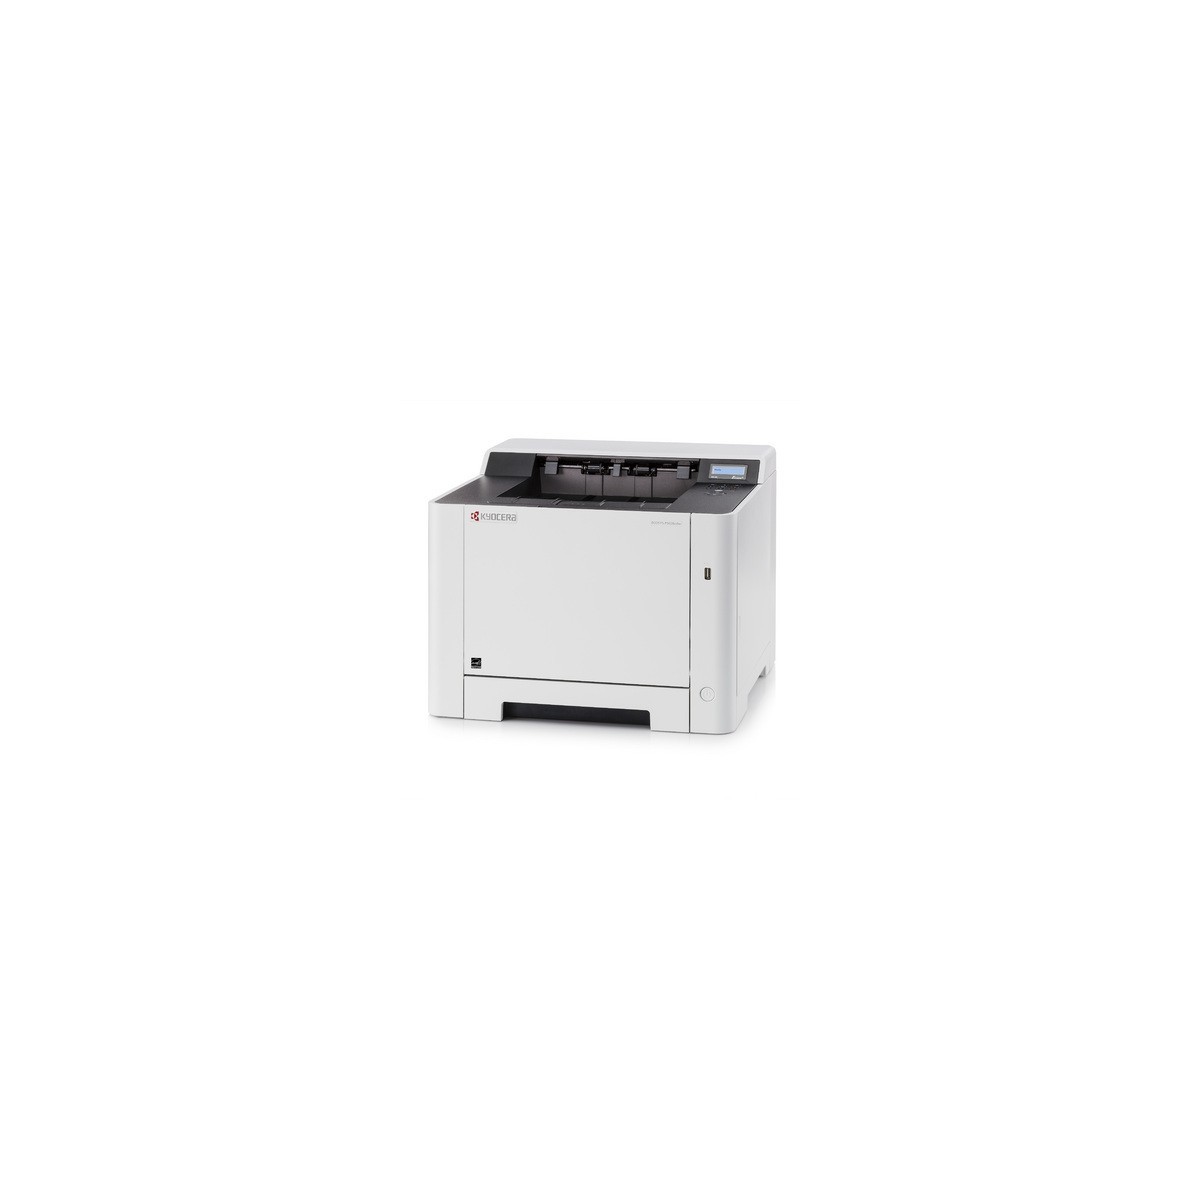 Kyocera ECOSYS P5026cdw - Laser - Colour - 9600 x 600 DPI - A4 - 26 ppm - Duplex printing